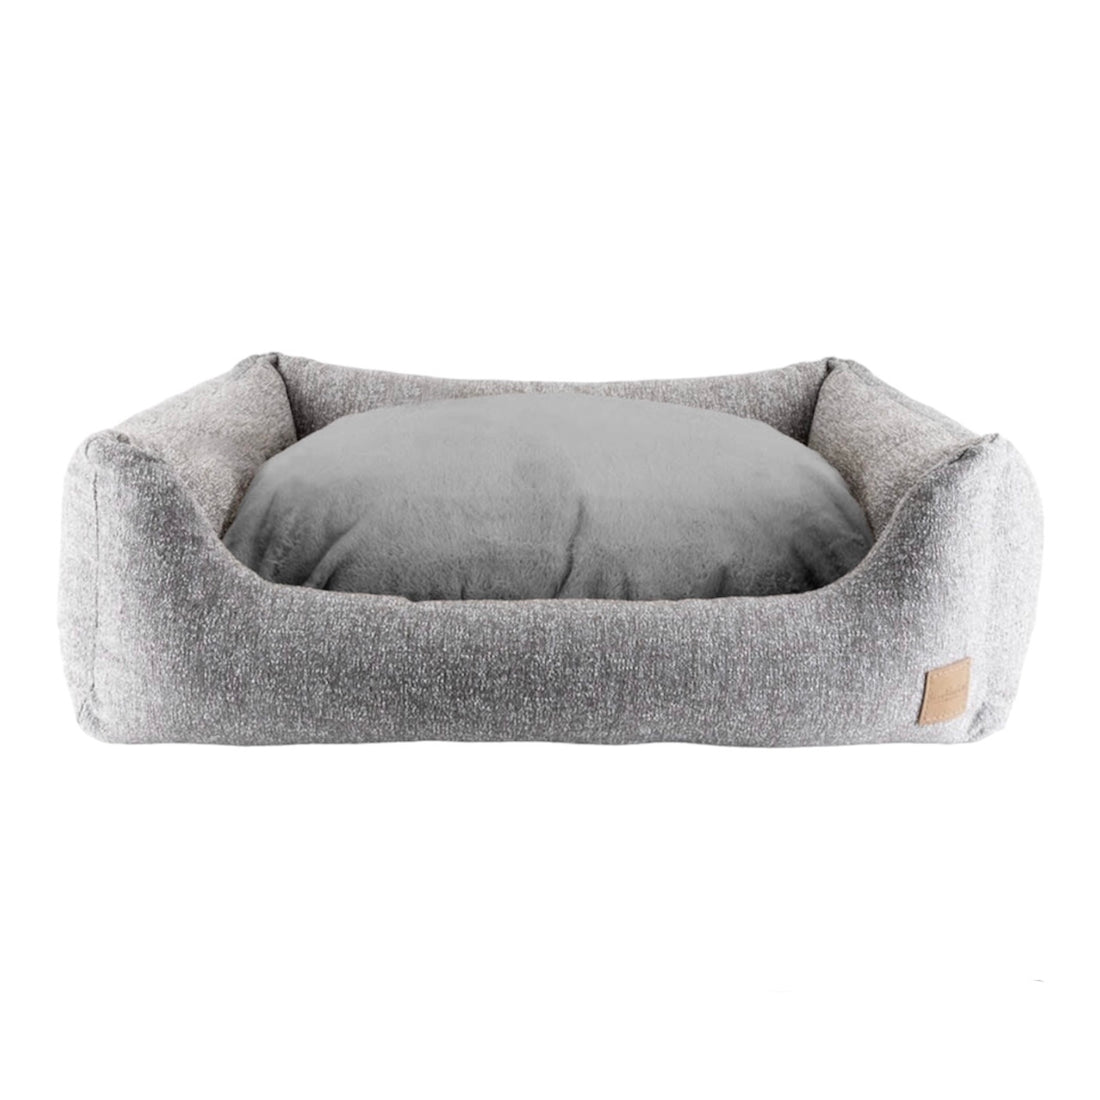 Impero Dog Bed - Shock Grey